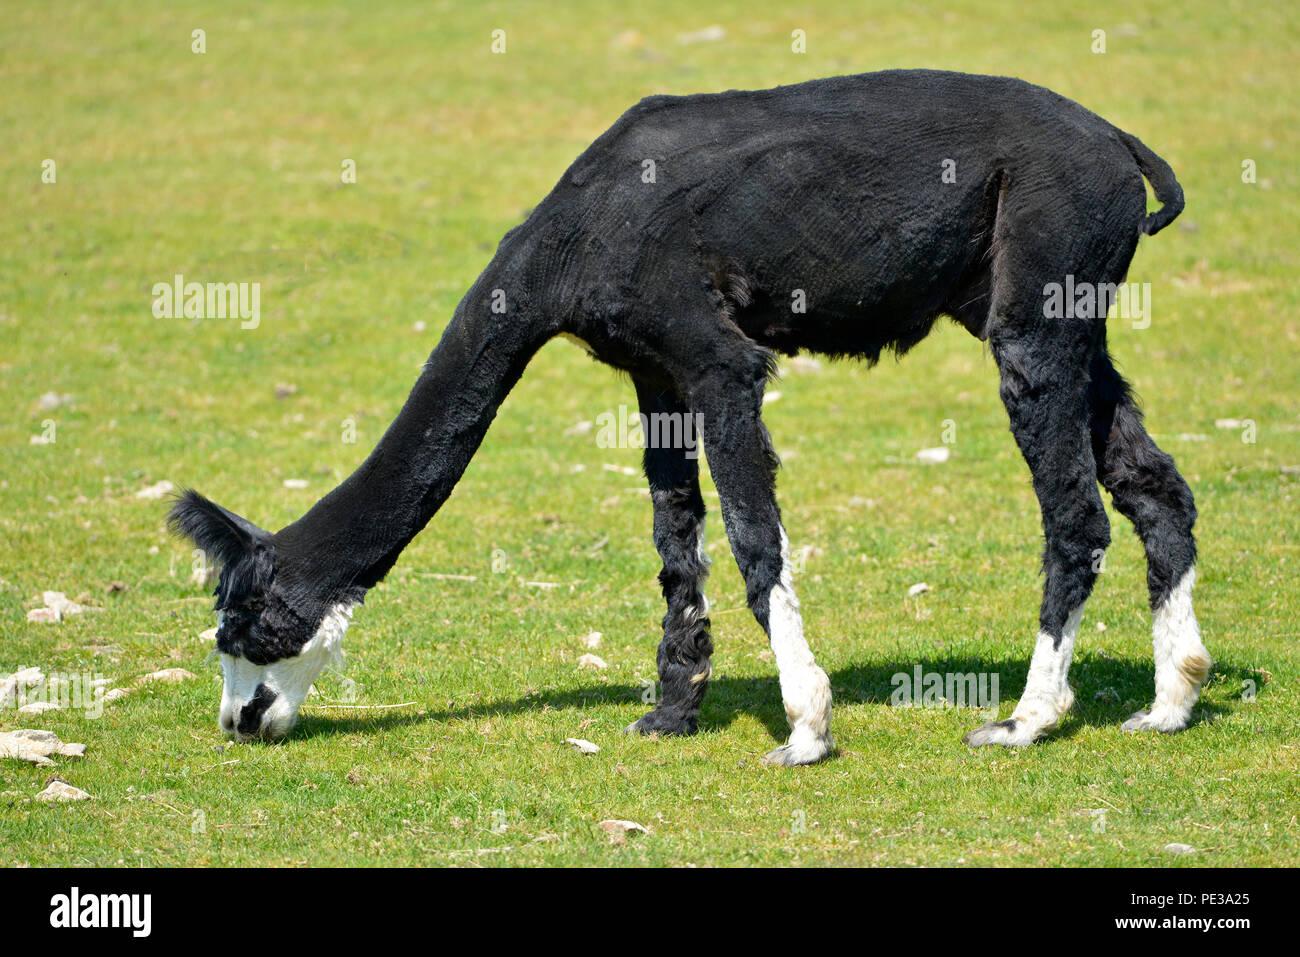 Black alpaca (Vicugna pacos) grazing seen from profile Stock Photo